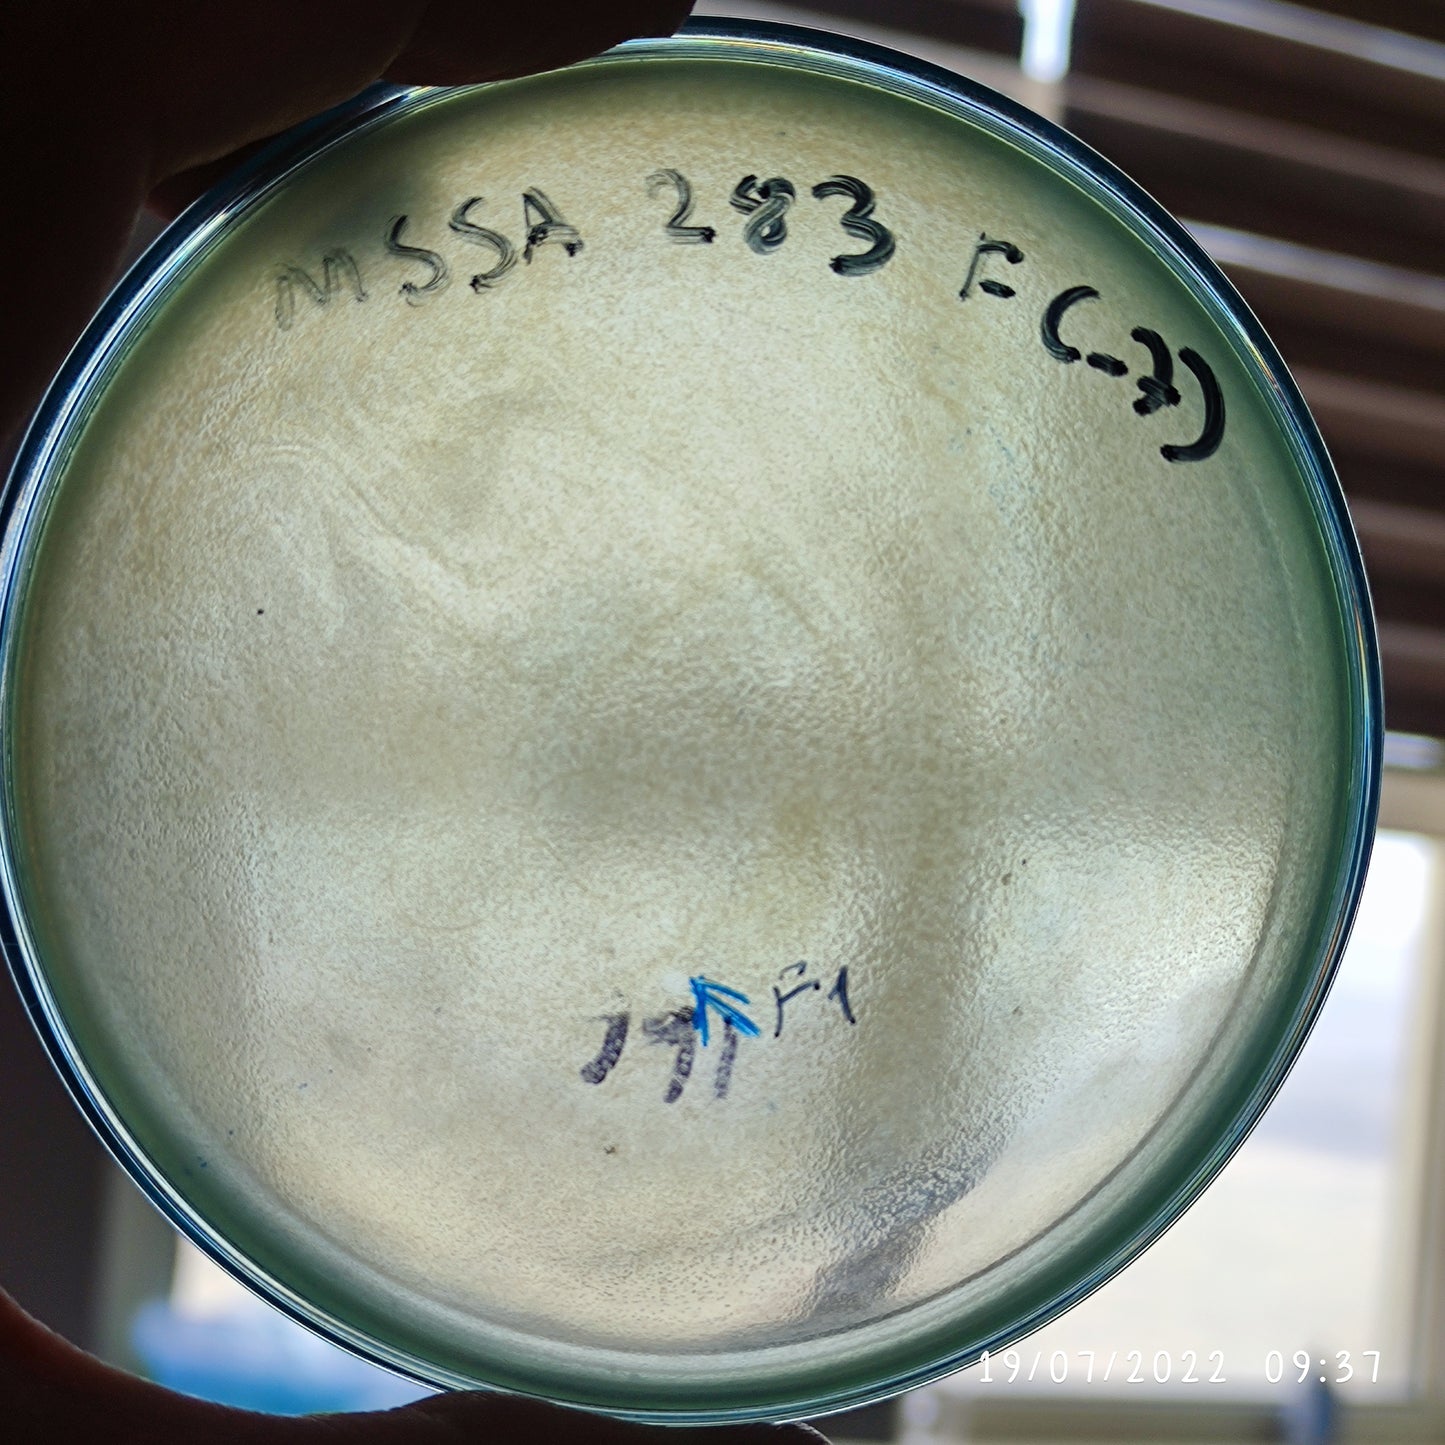 Staphylococcus aureus bacteriophage 152283F